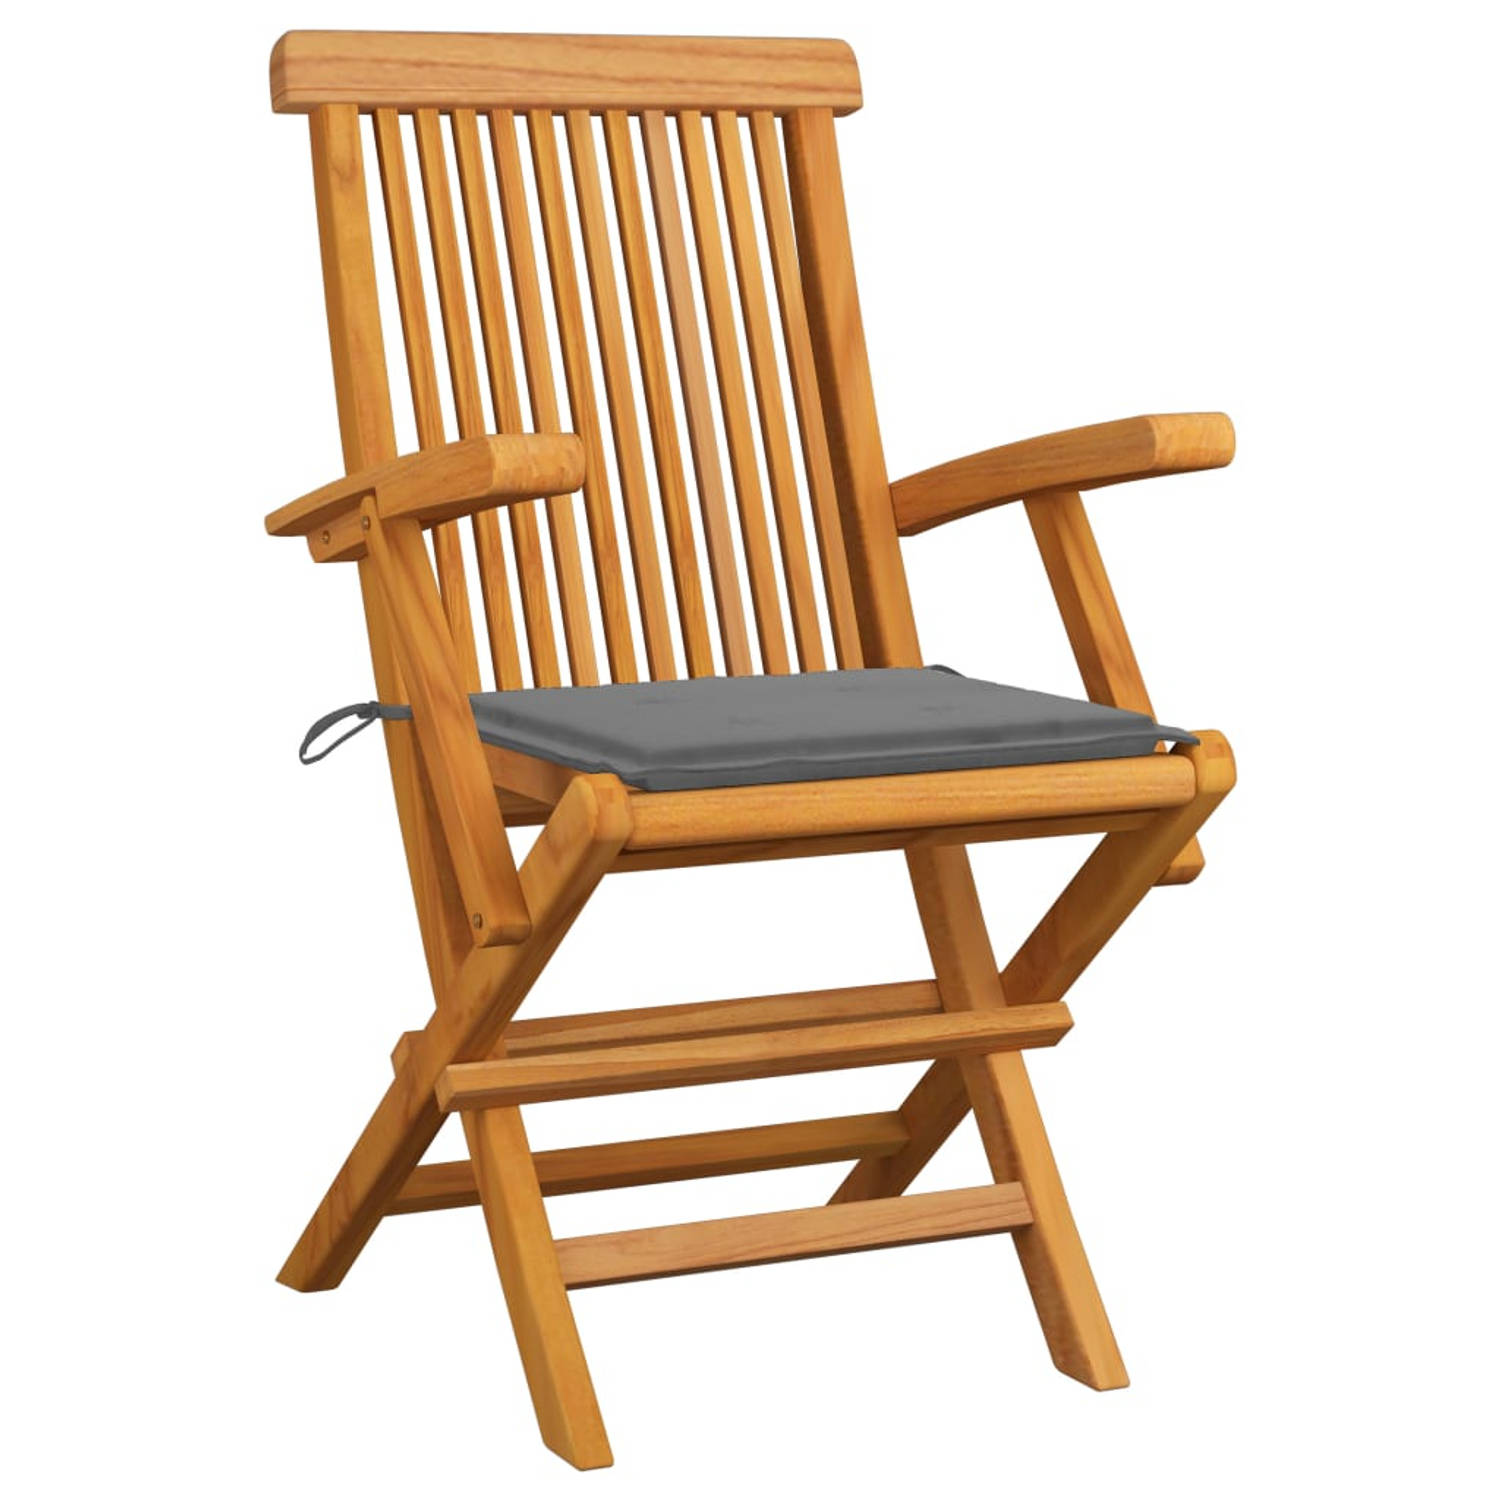 The Living Store Tuinstoelenset - Hout - 55x60x89 cm - Inklapbaar - set van 4 stoelen